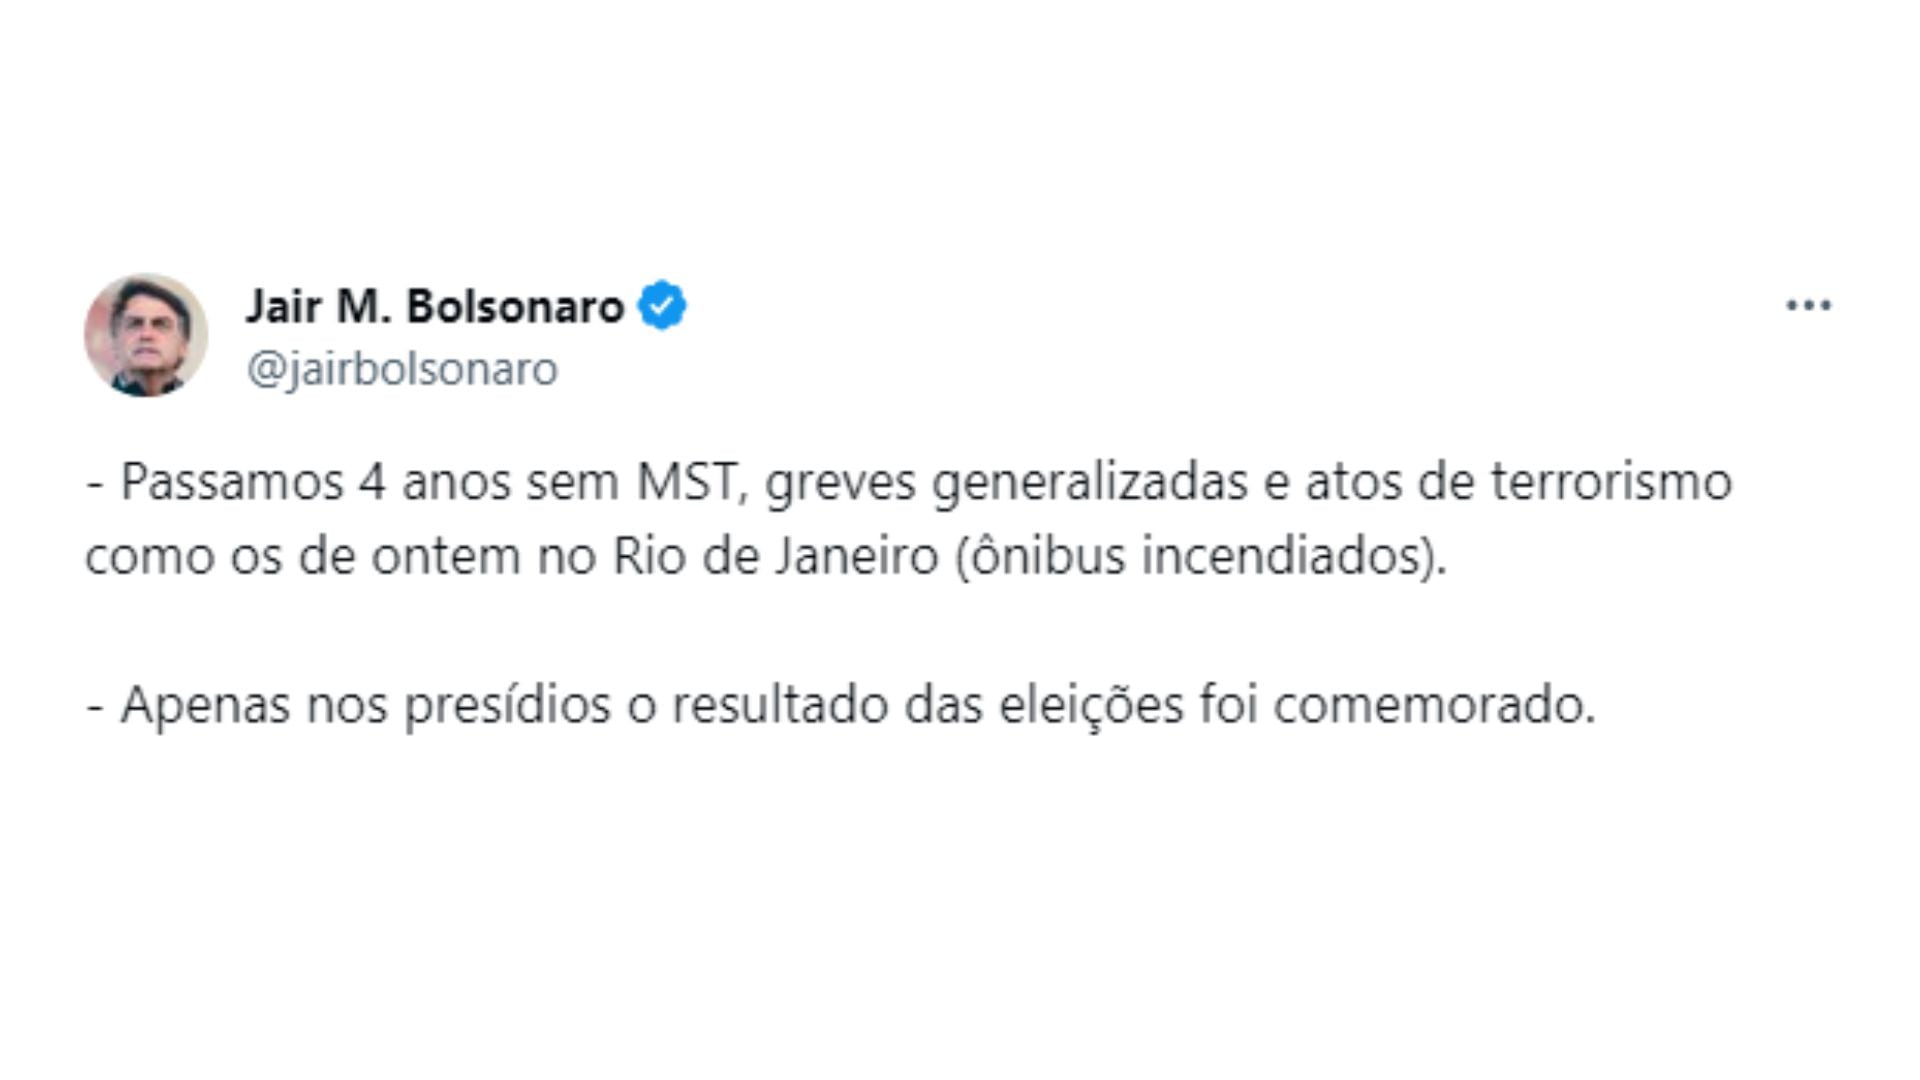 El mensaje de Jair Bolsonaro